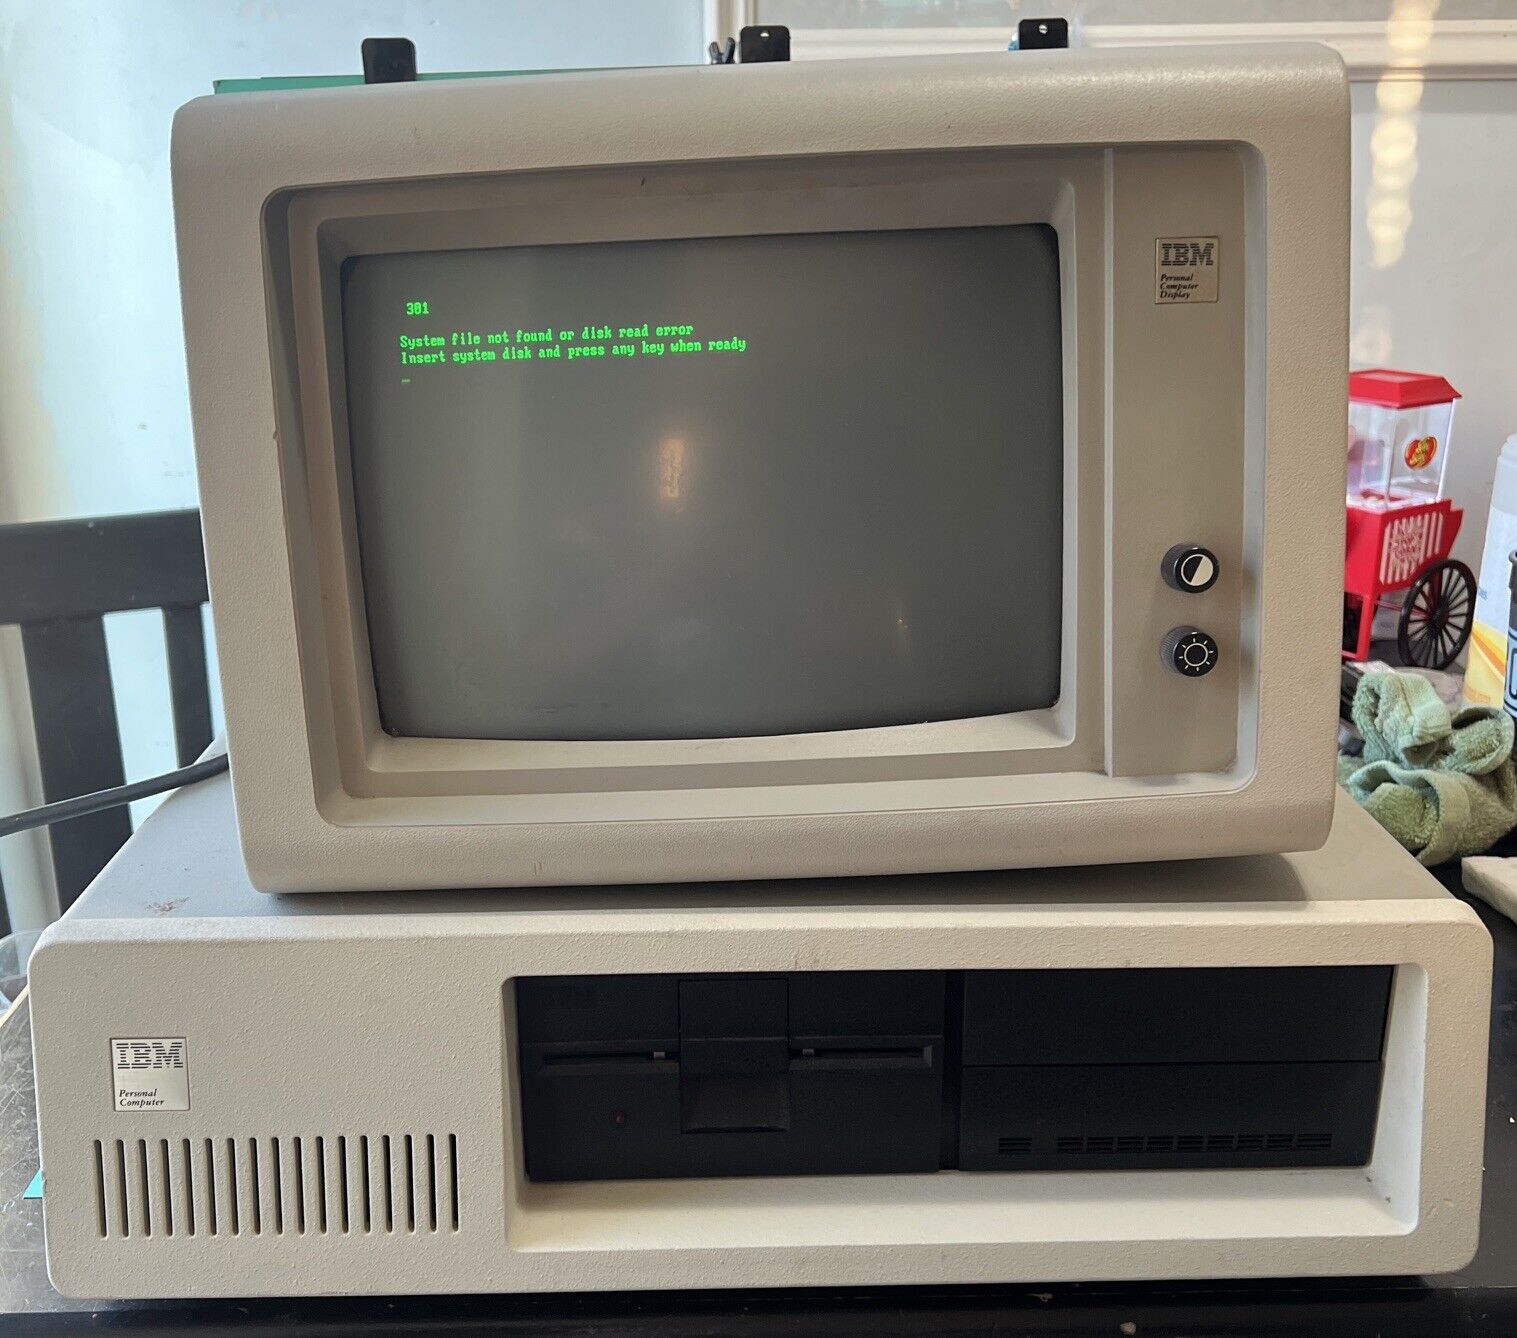 IBM PC Computer Model 5150 Working Video Card 512K Ram 5151 Monitor - As Seen